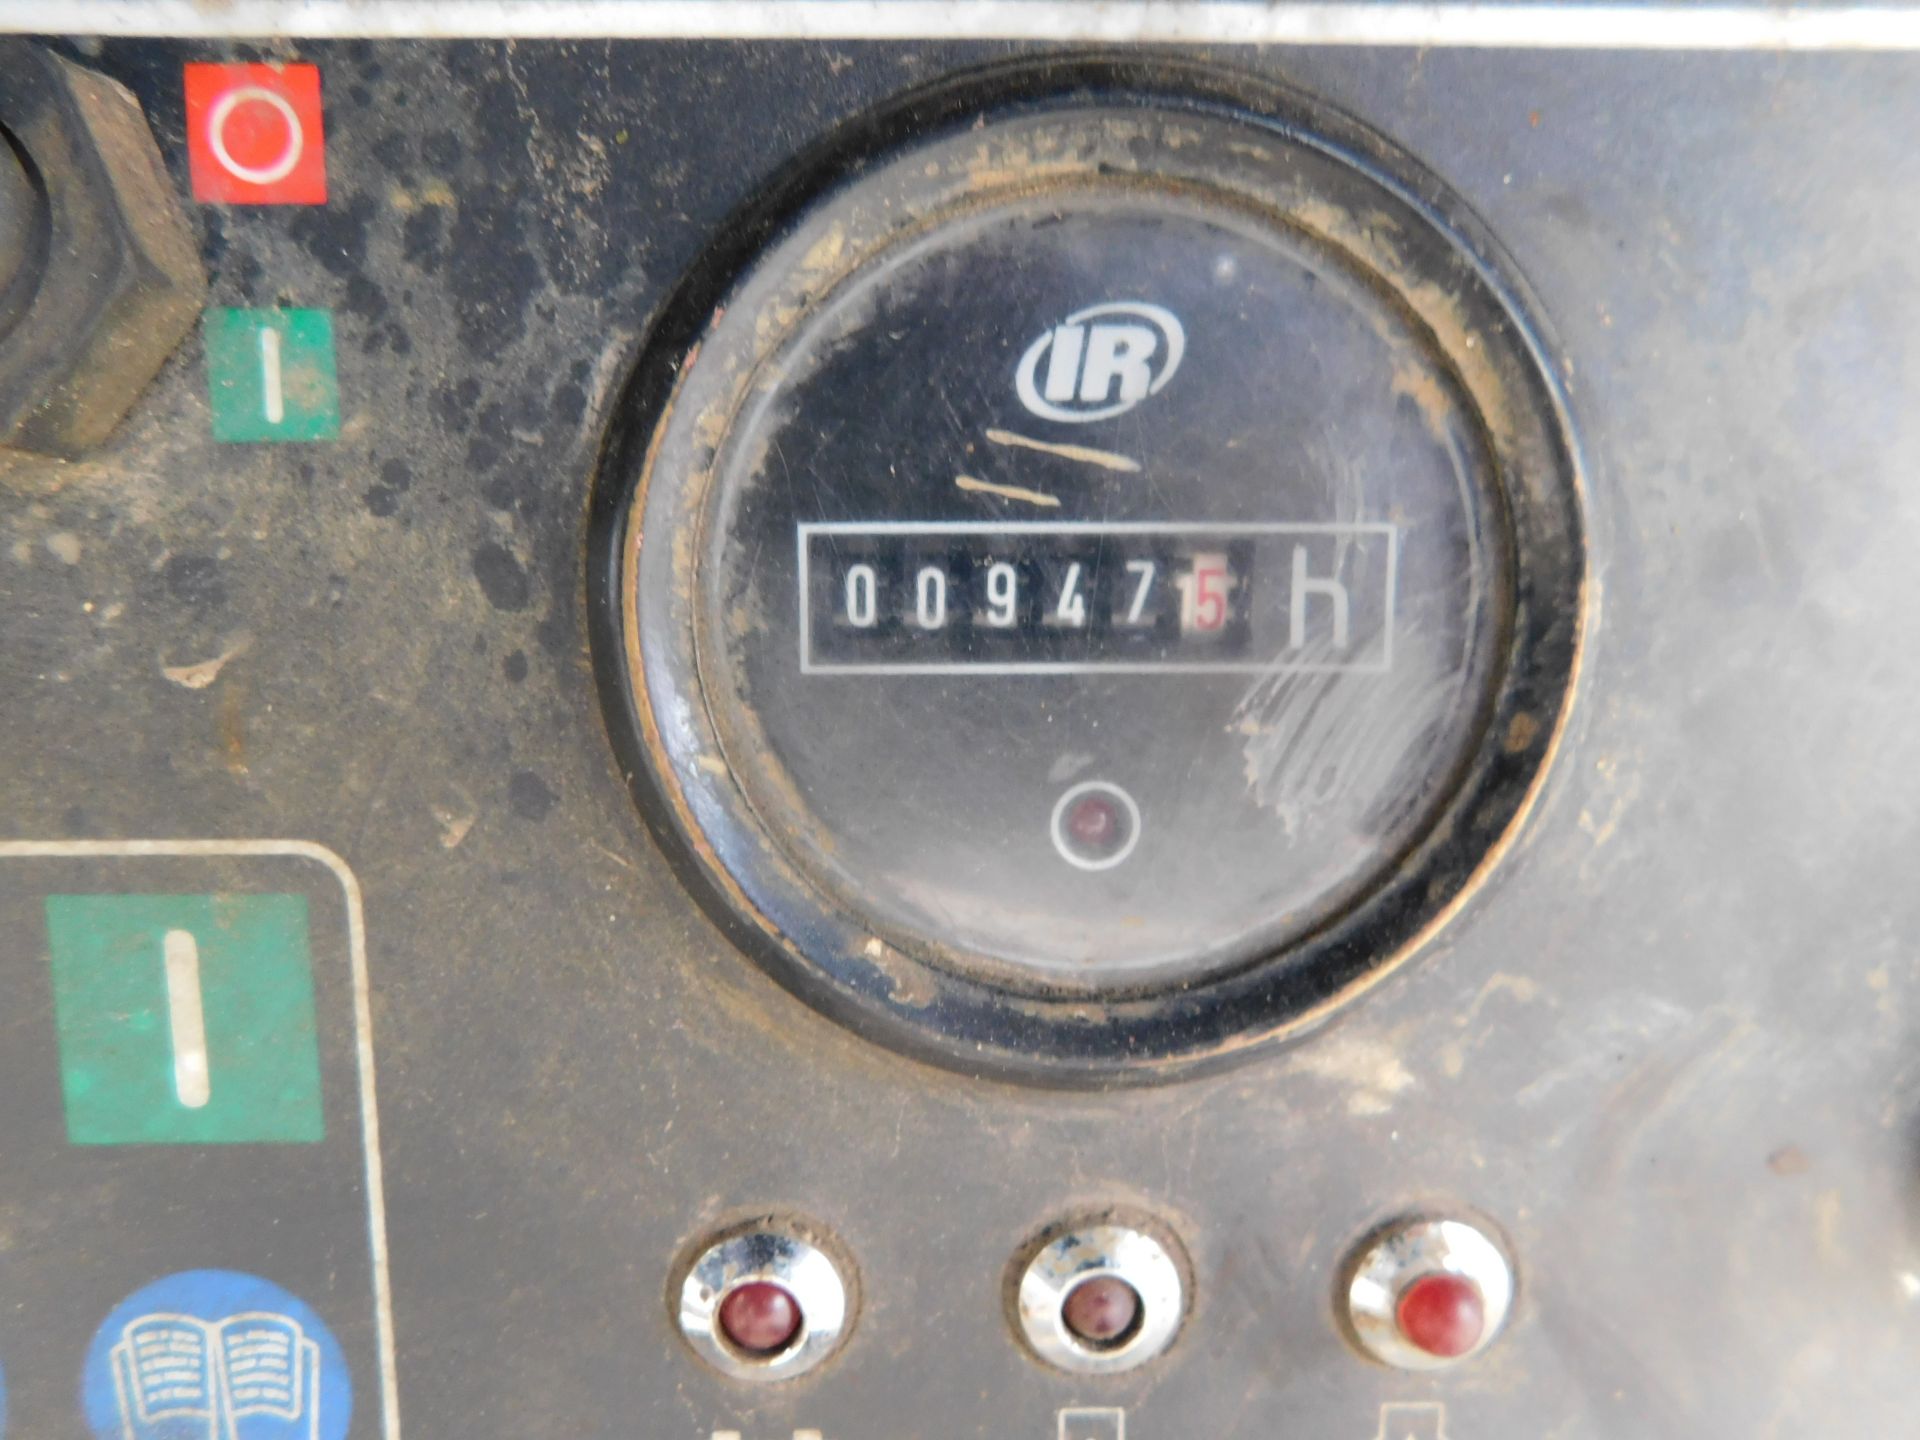 Doosan 731E+ Trailer Mounted Compressor (2013), Serial Number UN5731EFXDY322632, 948 hours ( - Image 7 of 10